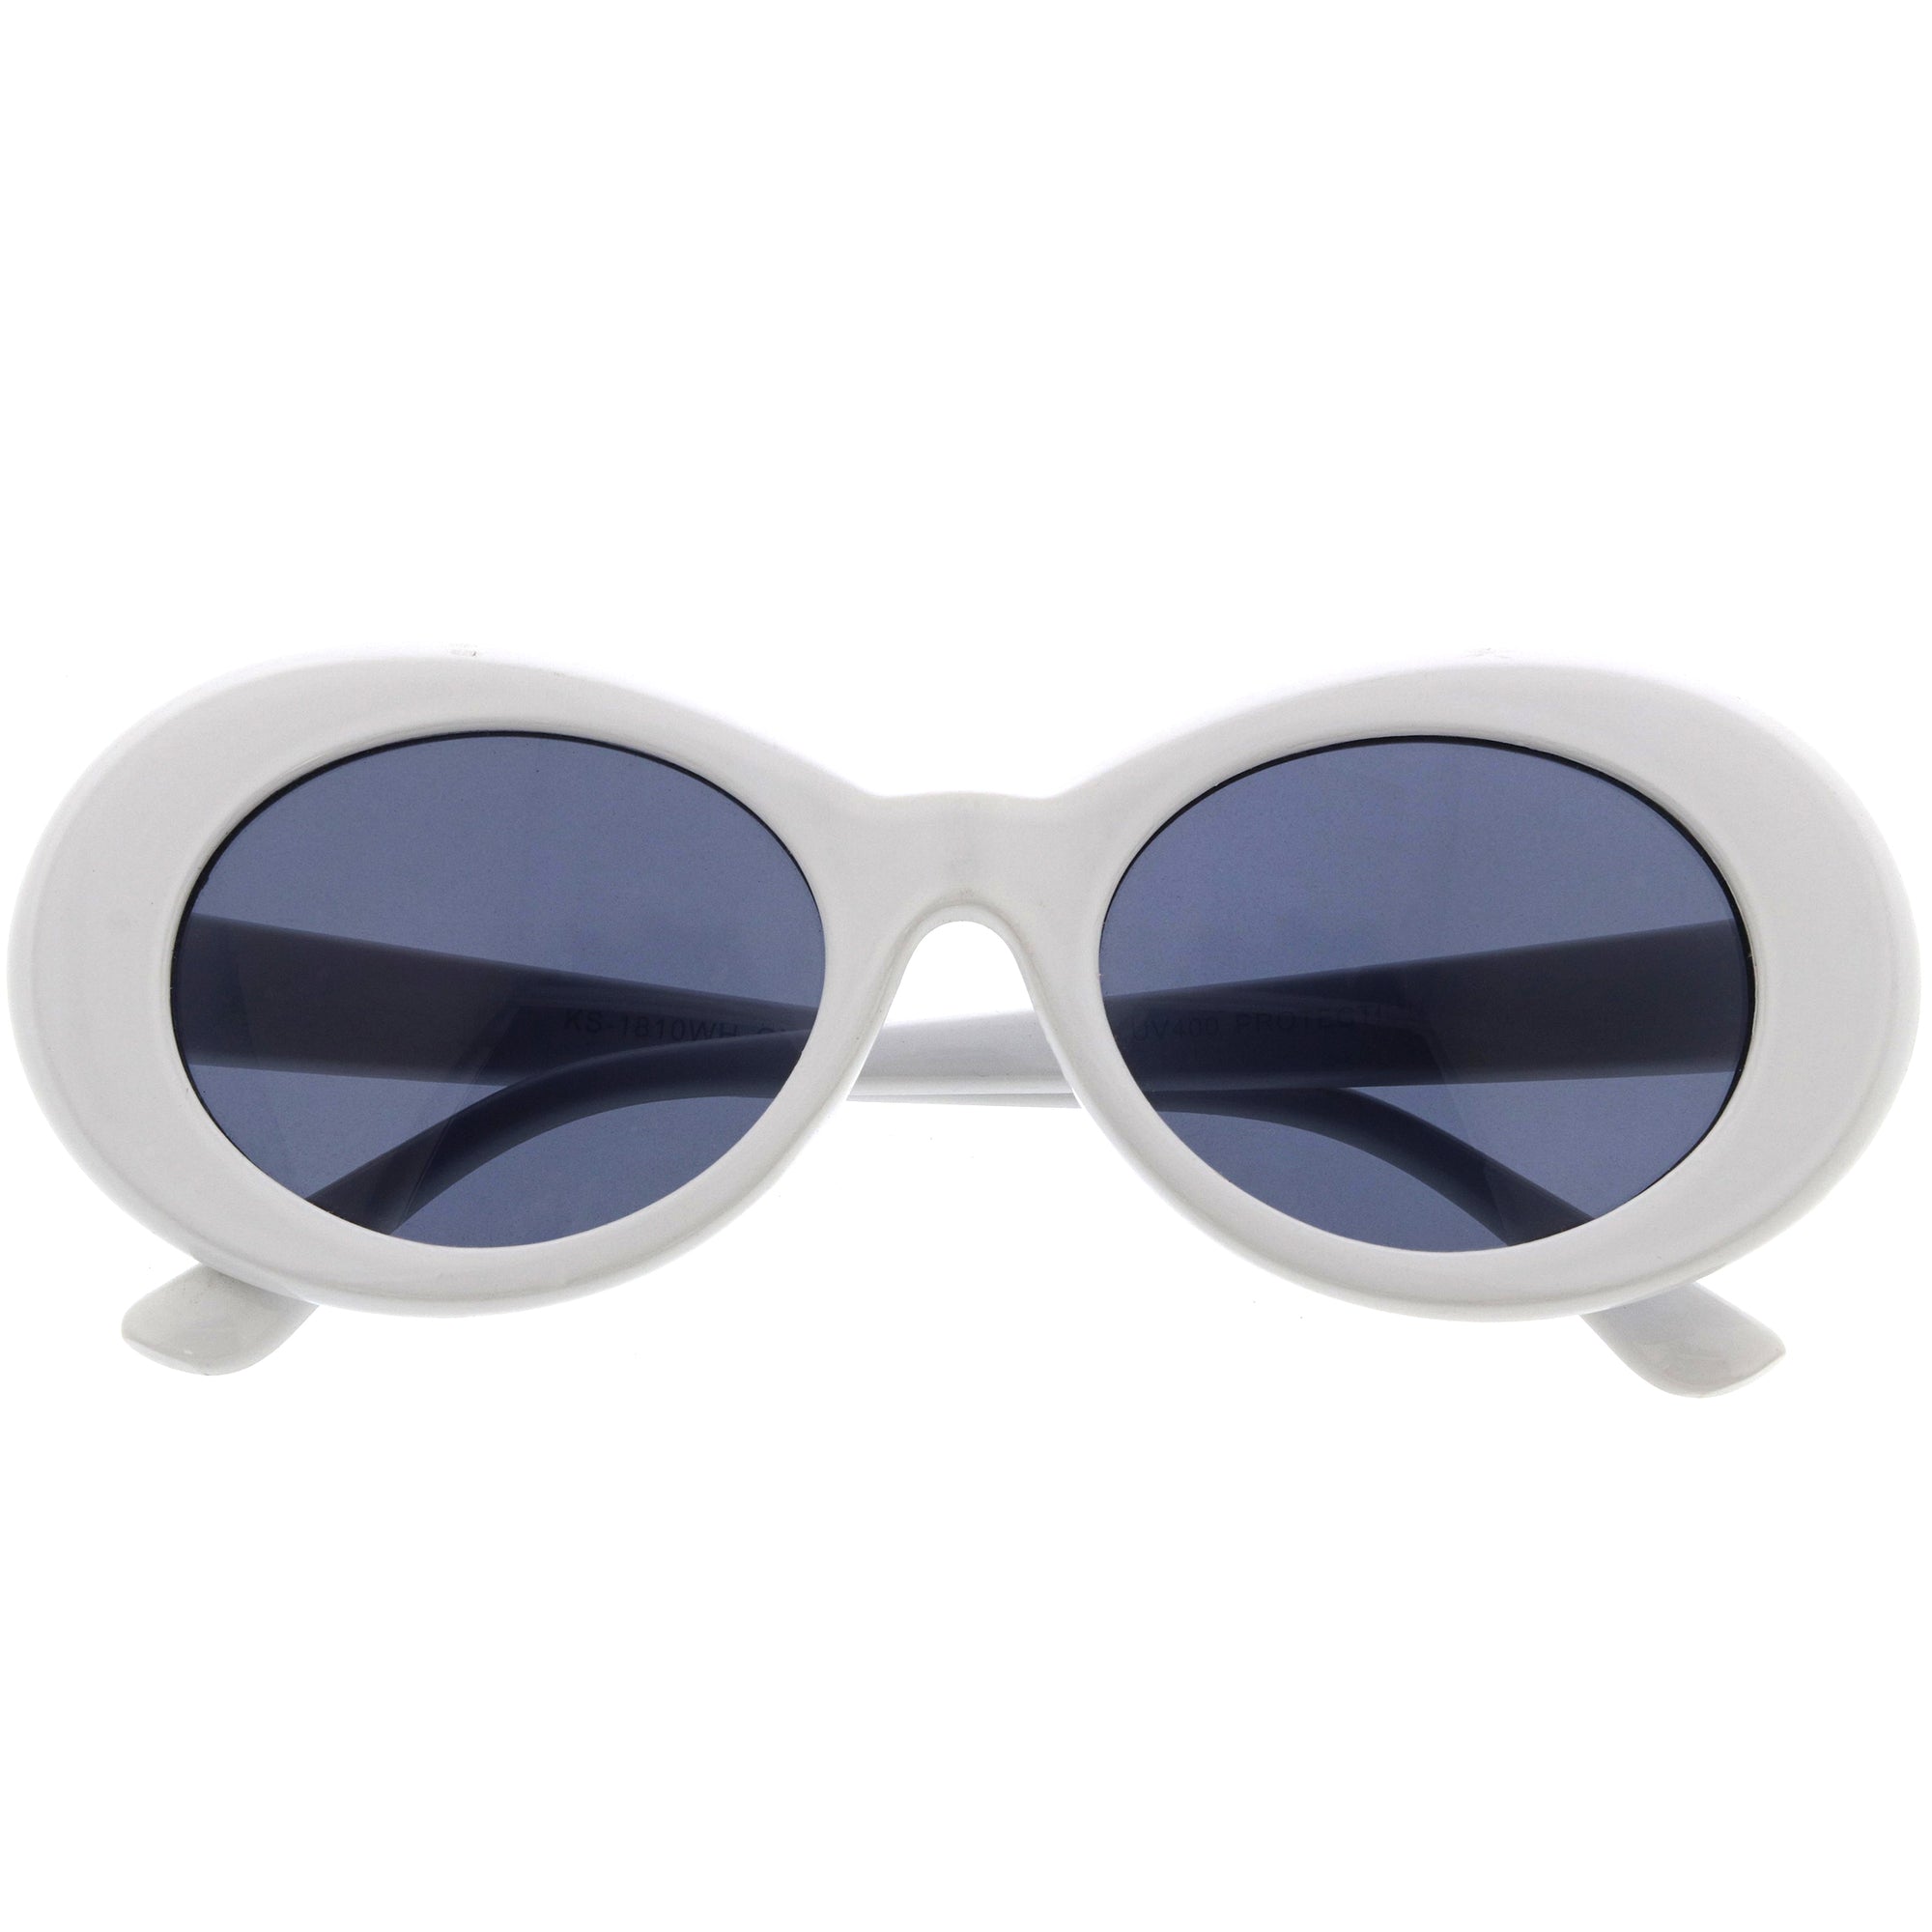 Dislocatie vertaler Gevangenisstraf Women's Retro 1950's Fashion Oval Clout Sunglasses 51mm - zeroUV